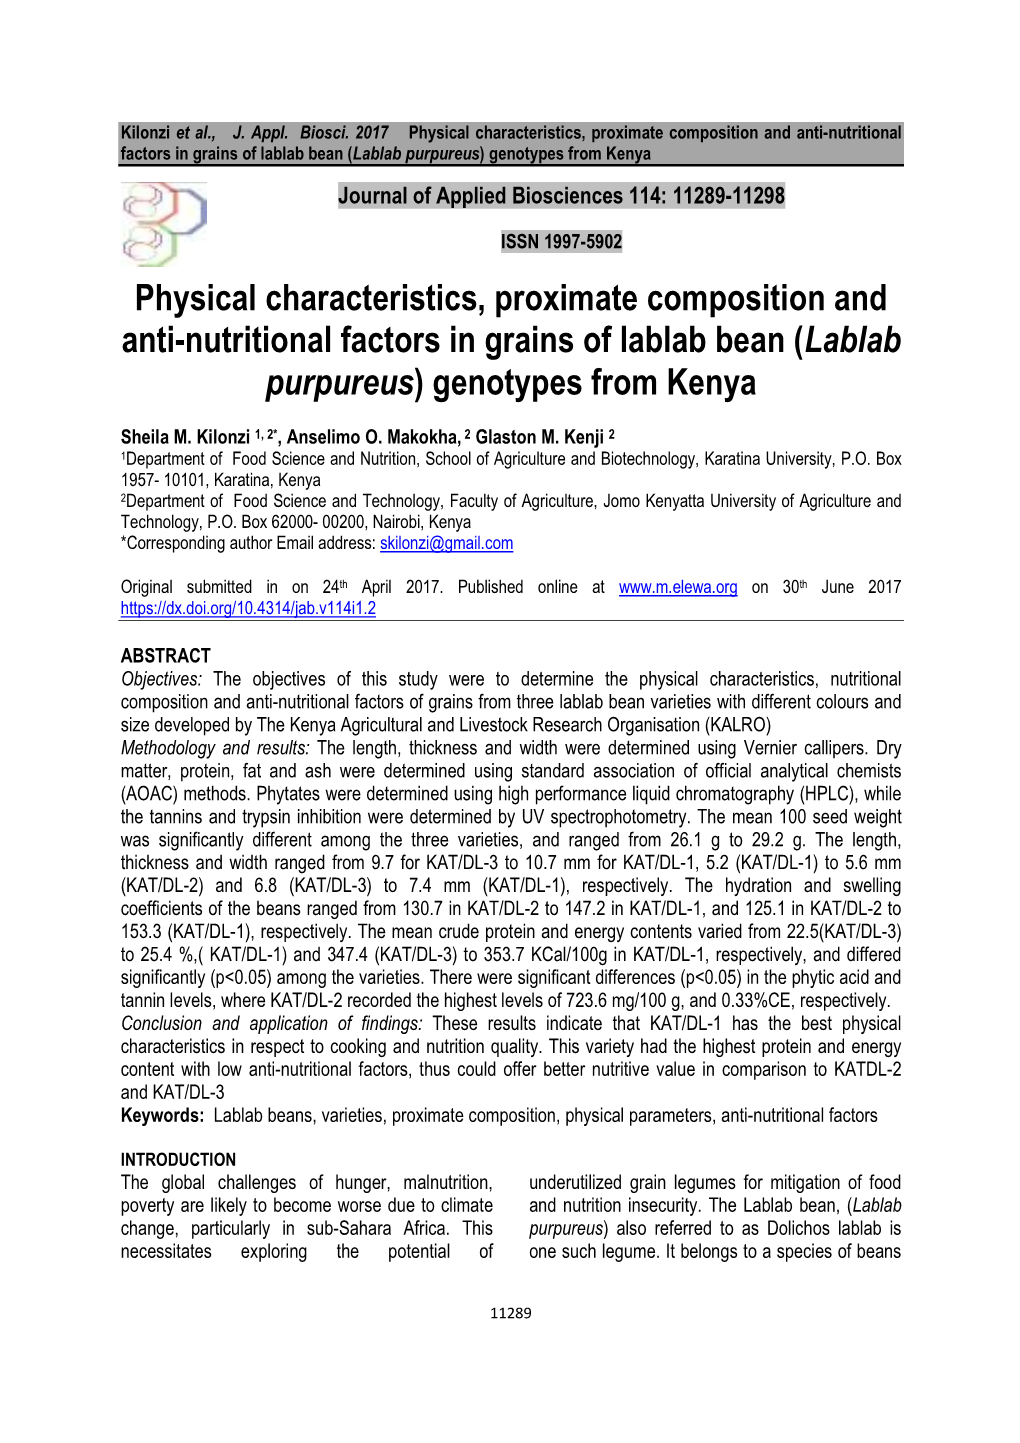 Lablab Purpureus ) Genotypes from Kenya Journal of Applied Biosciences 114: 11289-11298